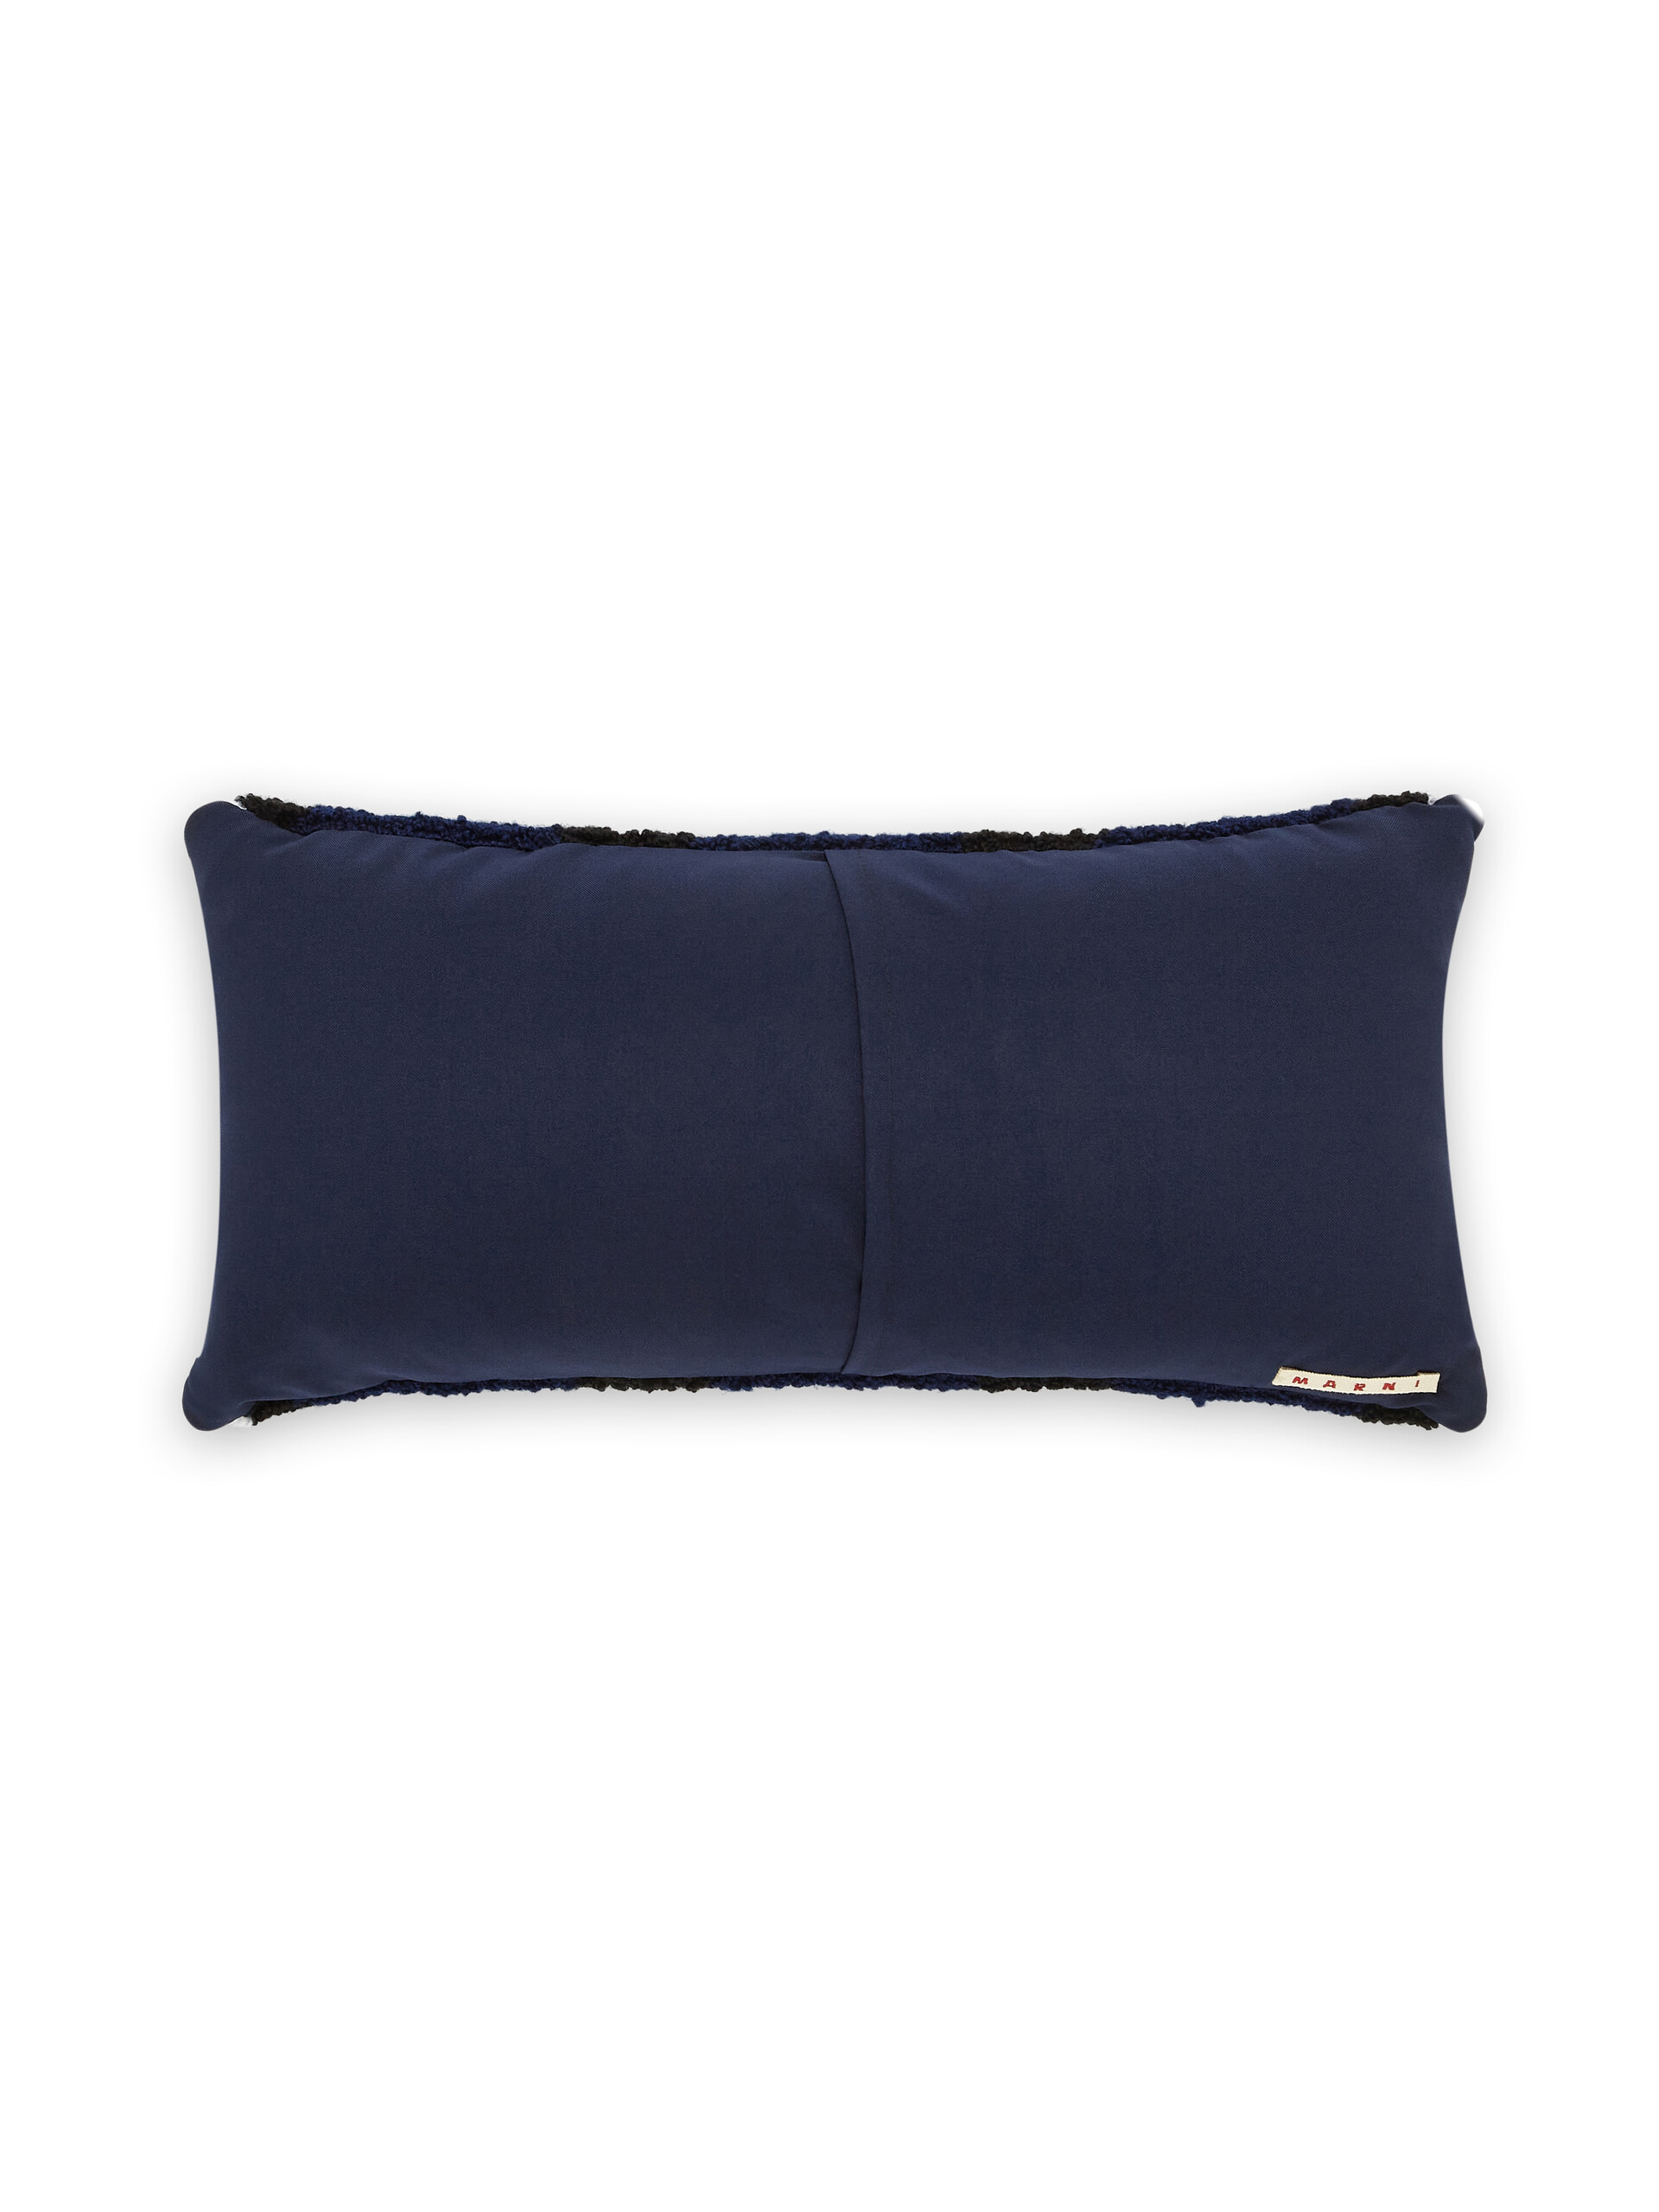 MARNI MARKET patterned cushion - Furniture - Image 2